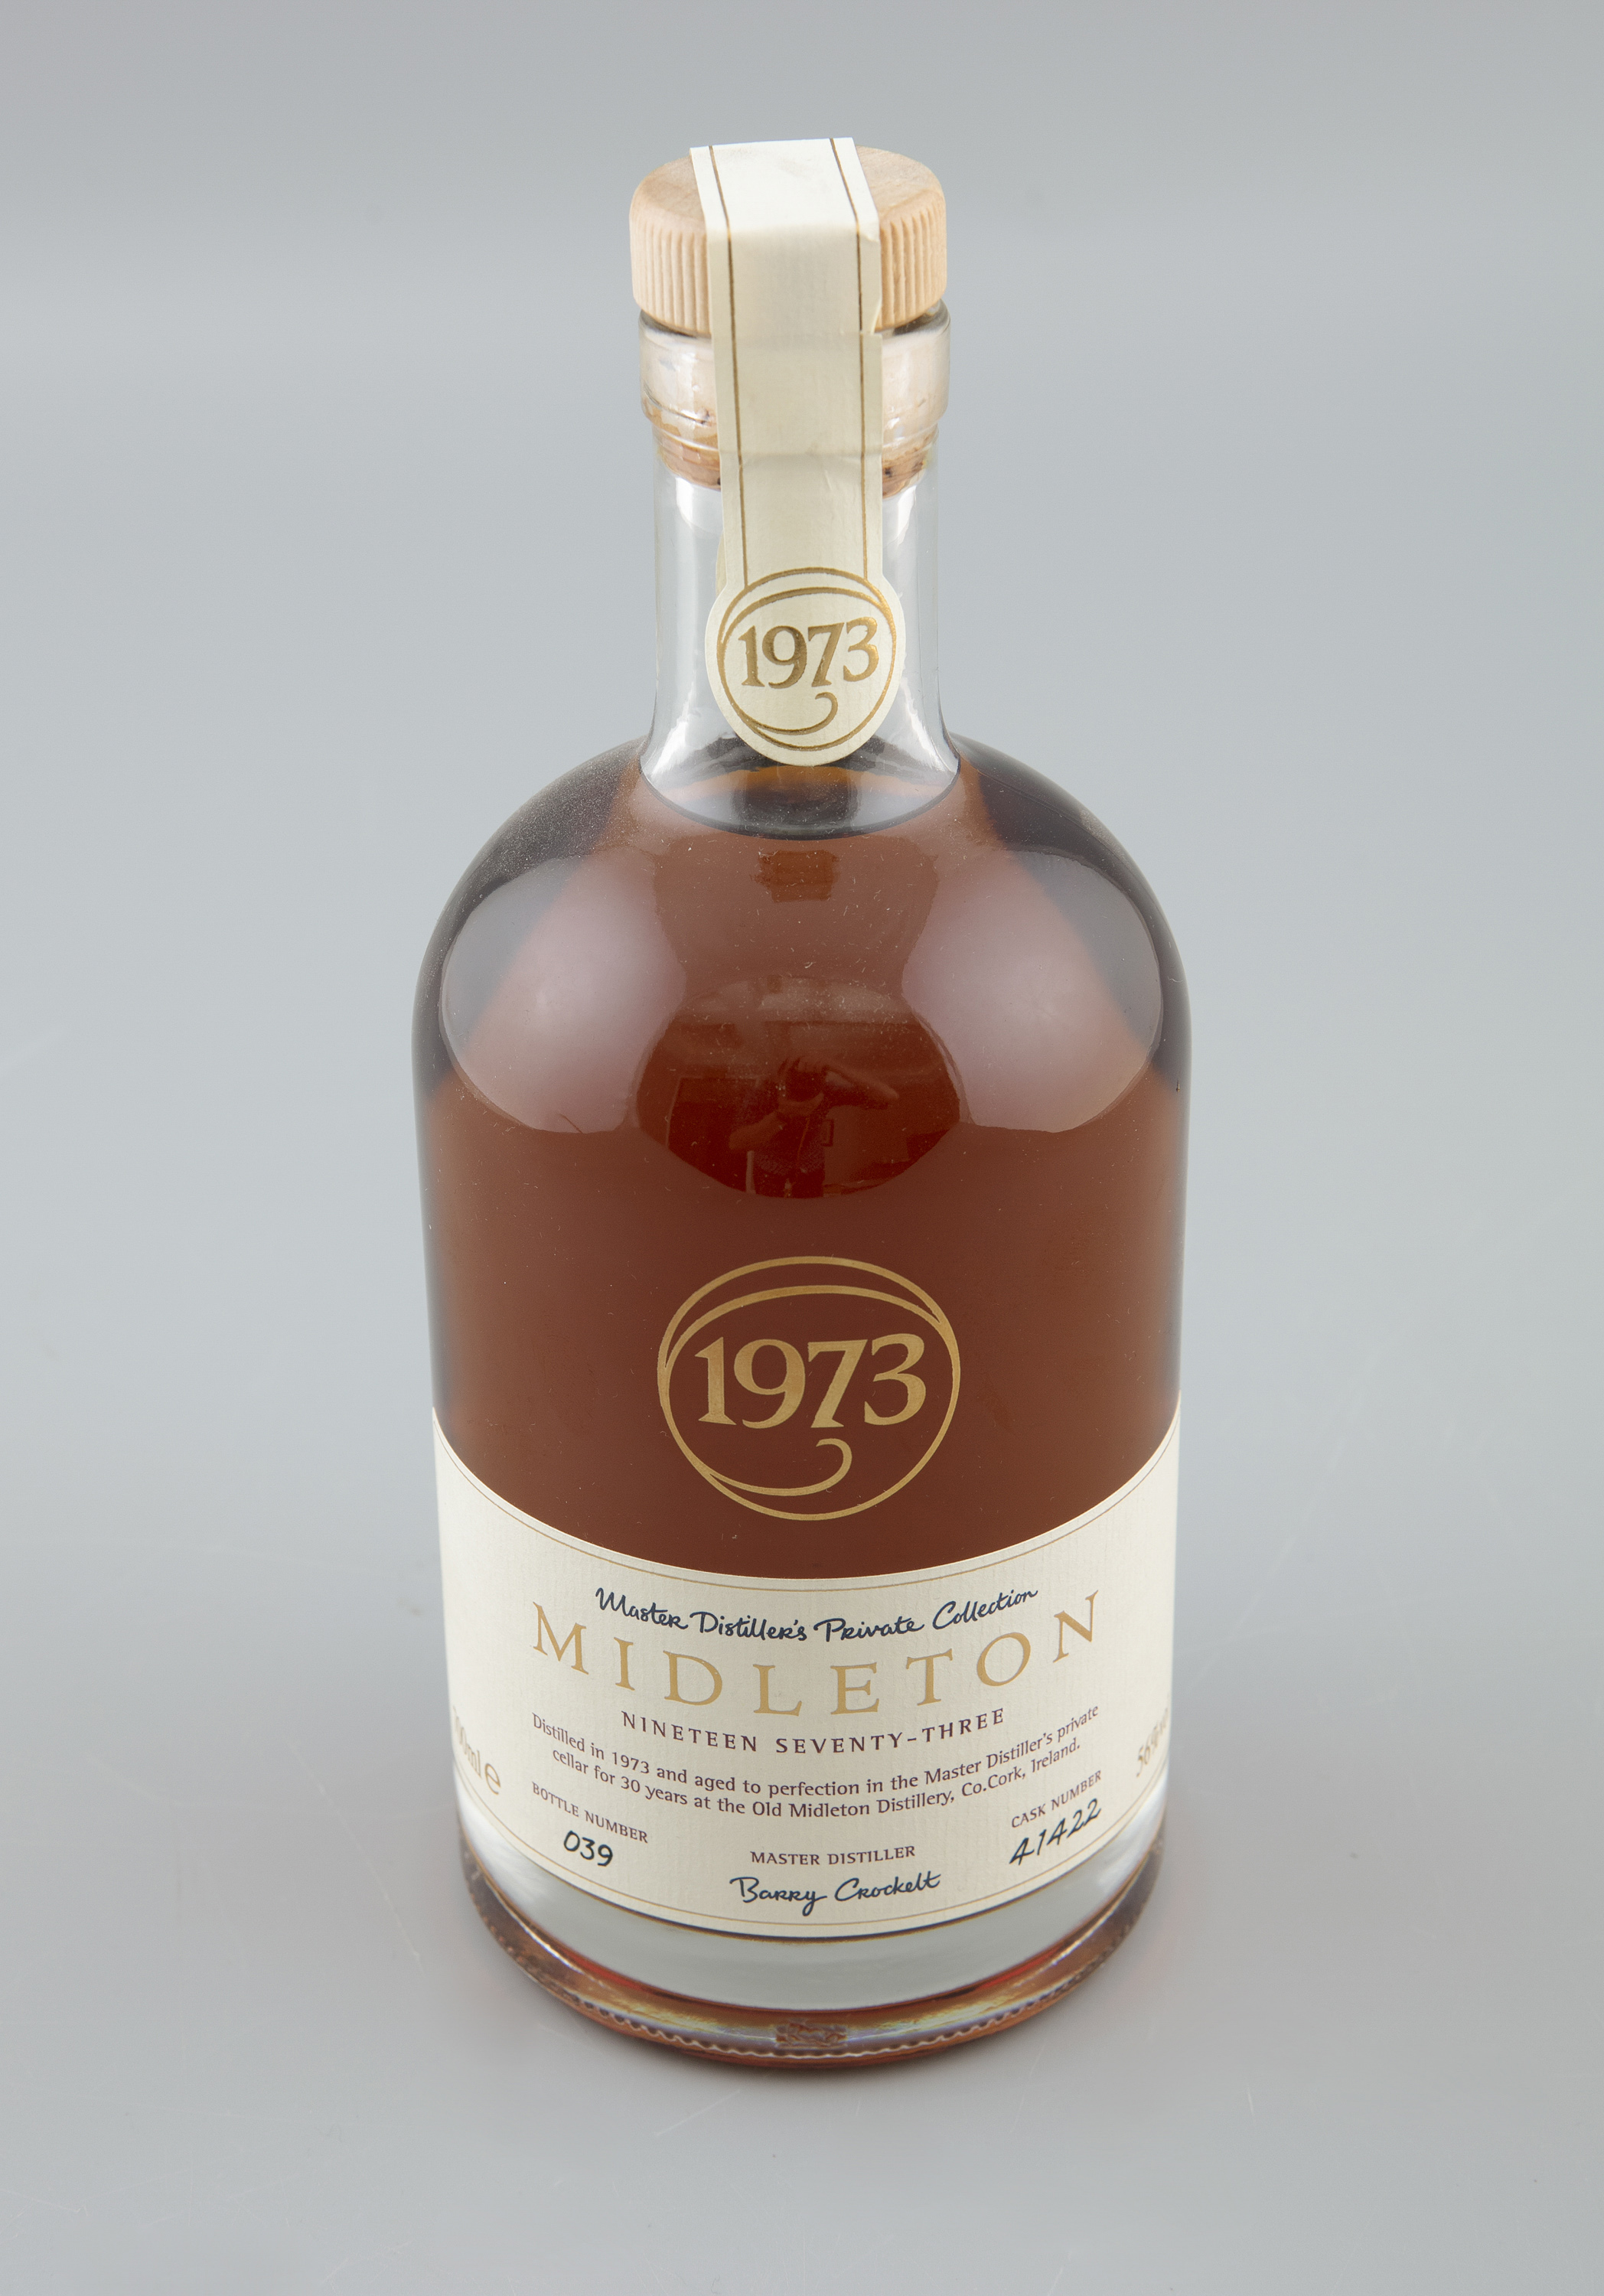 Midleton 25 Year Old Pure Pot Still Irish Whiskey 1 bottle in presentation case, bottle number 039 - Image 11 of 11